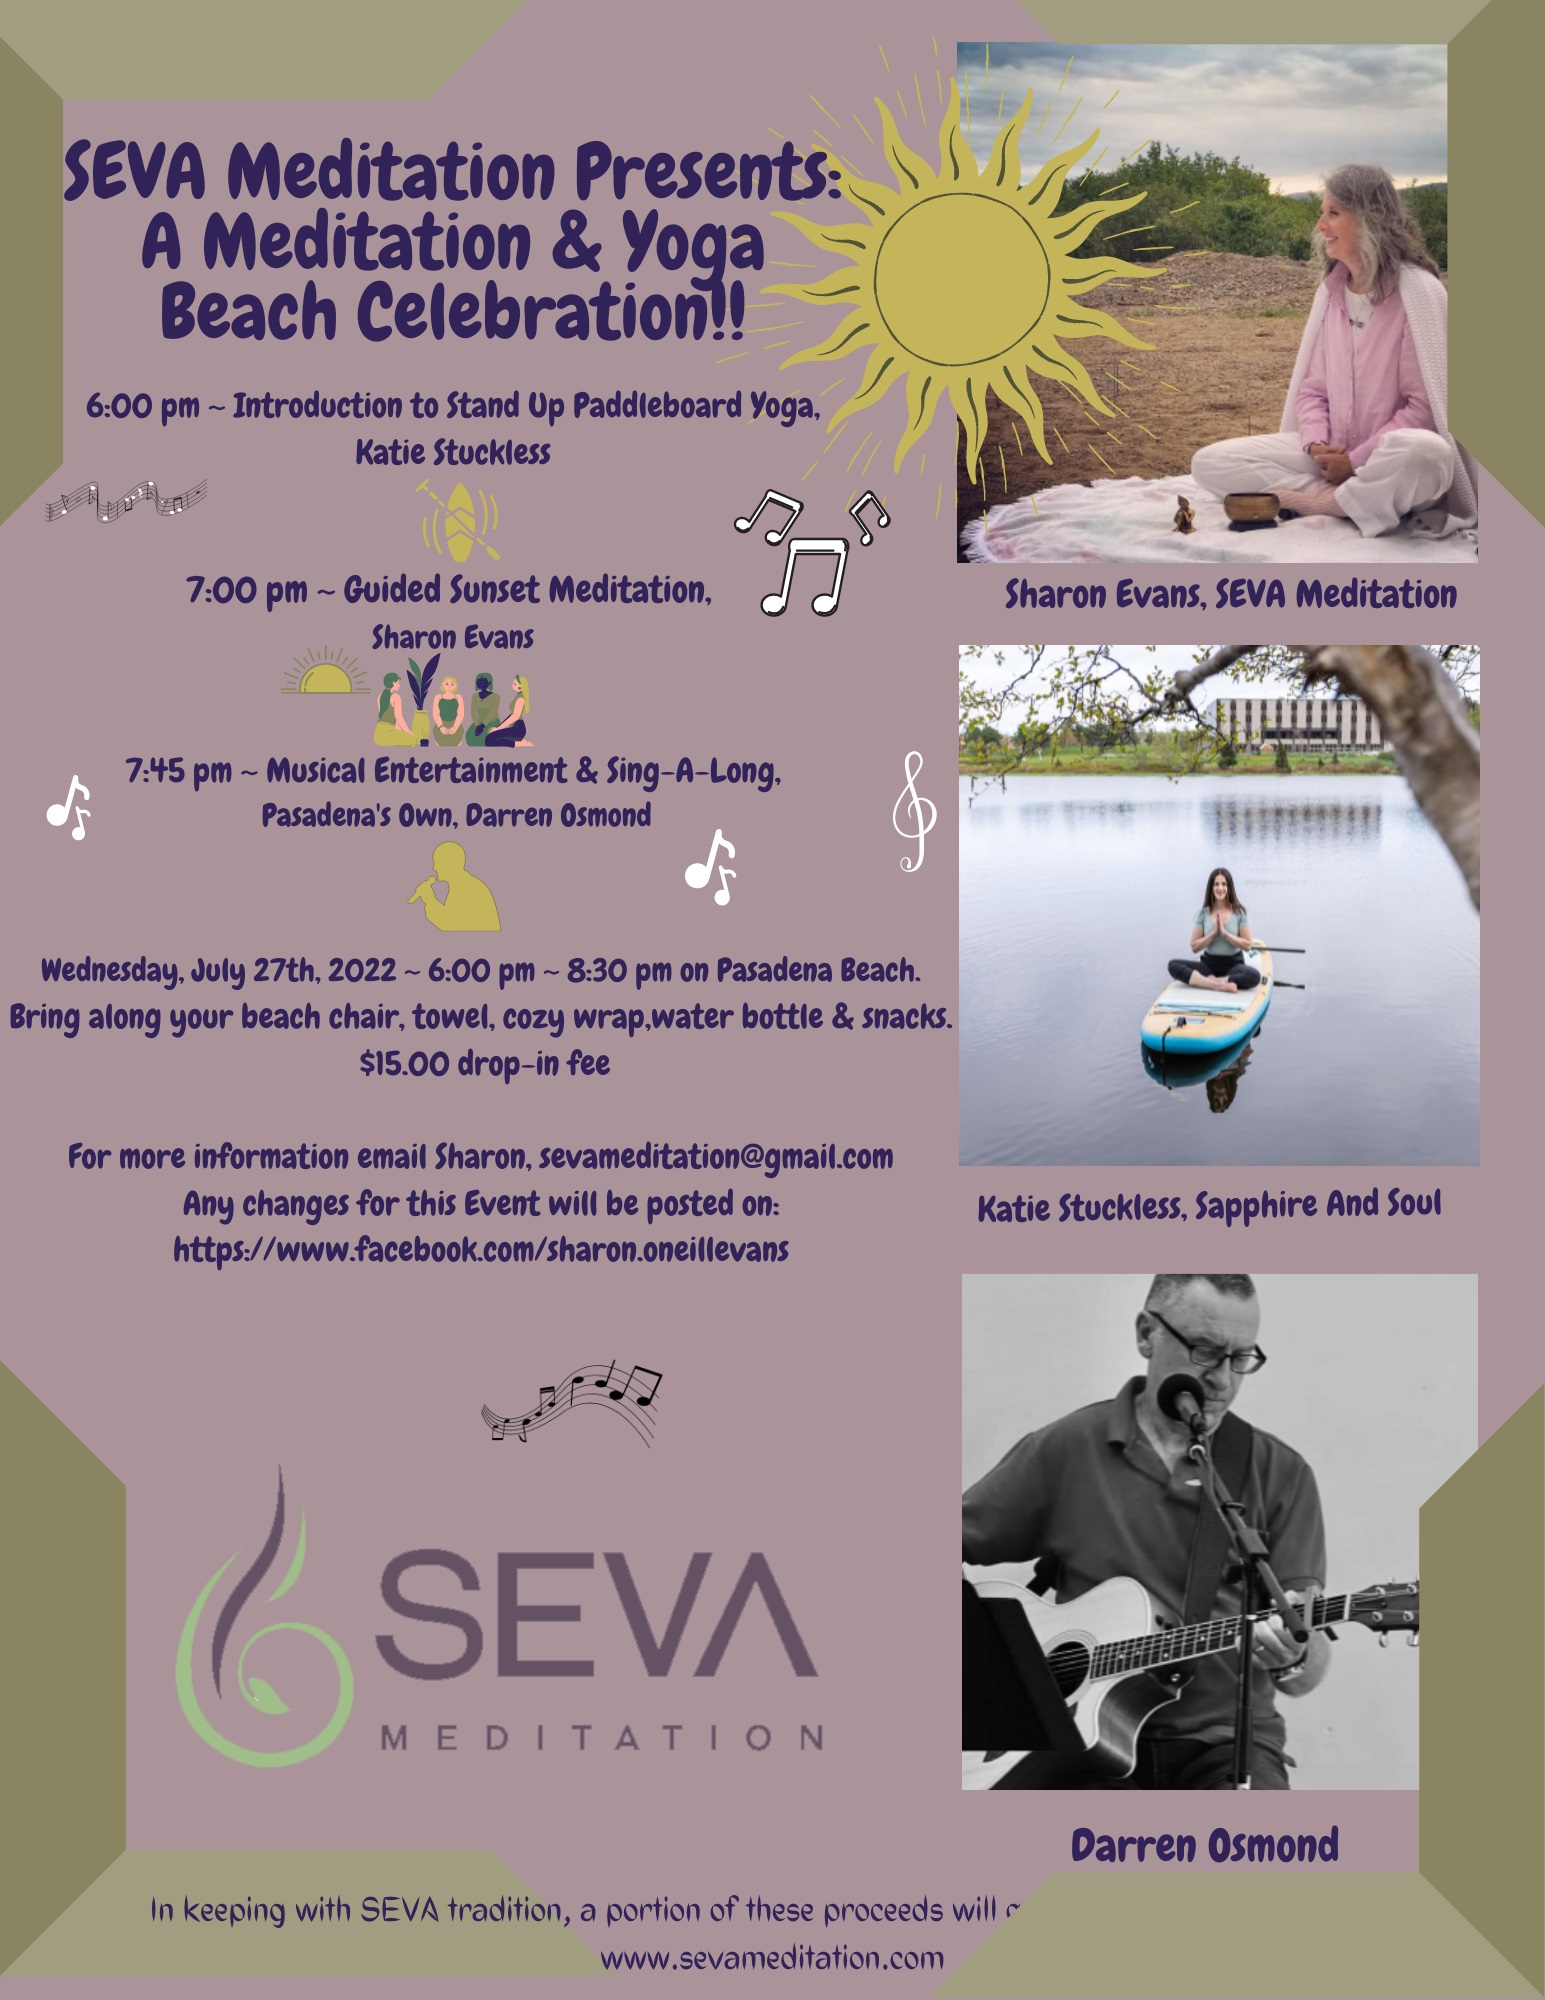 A Meditation & Yoga Beach Celebration!